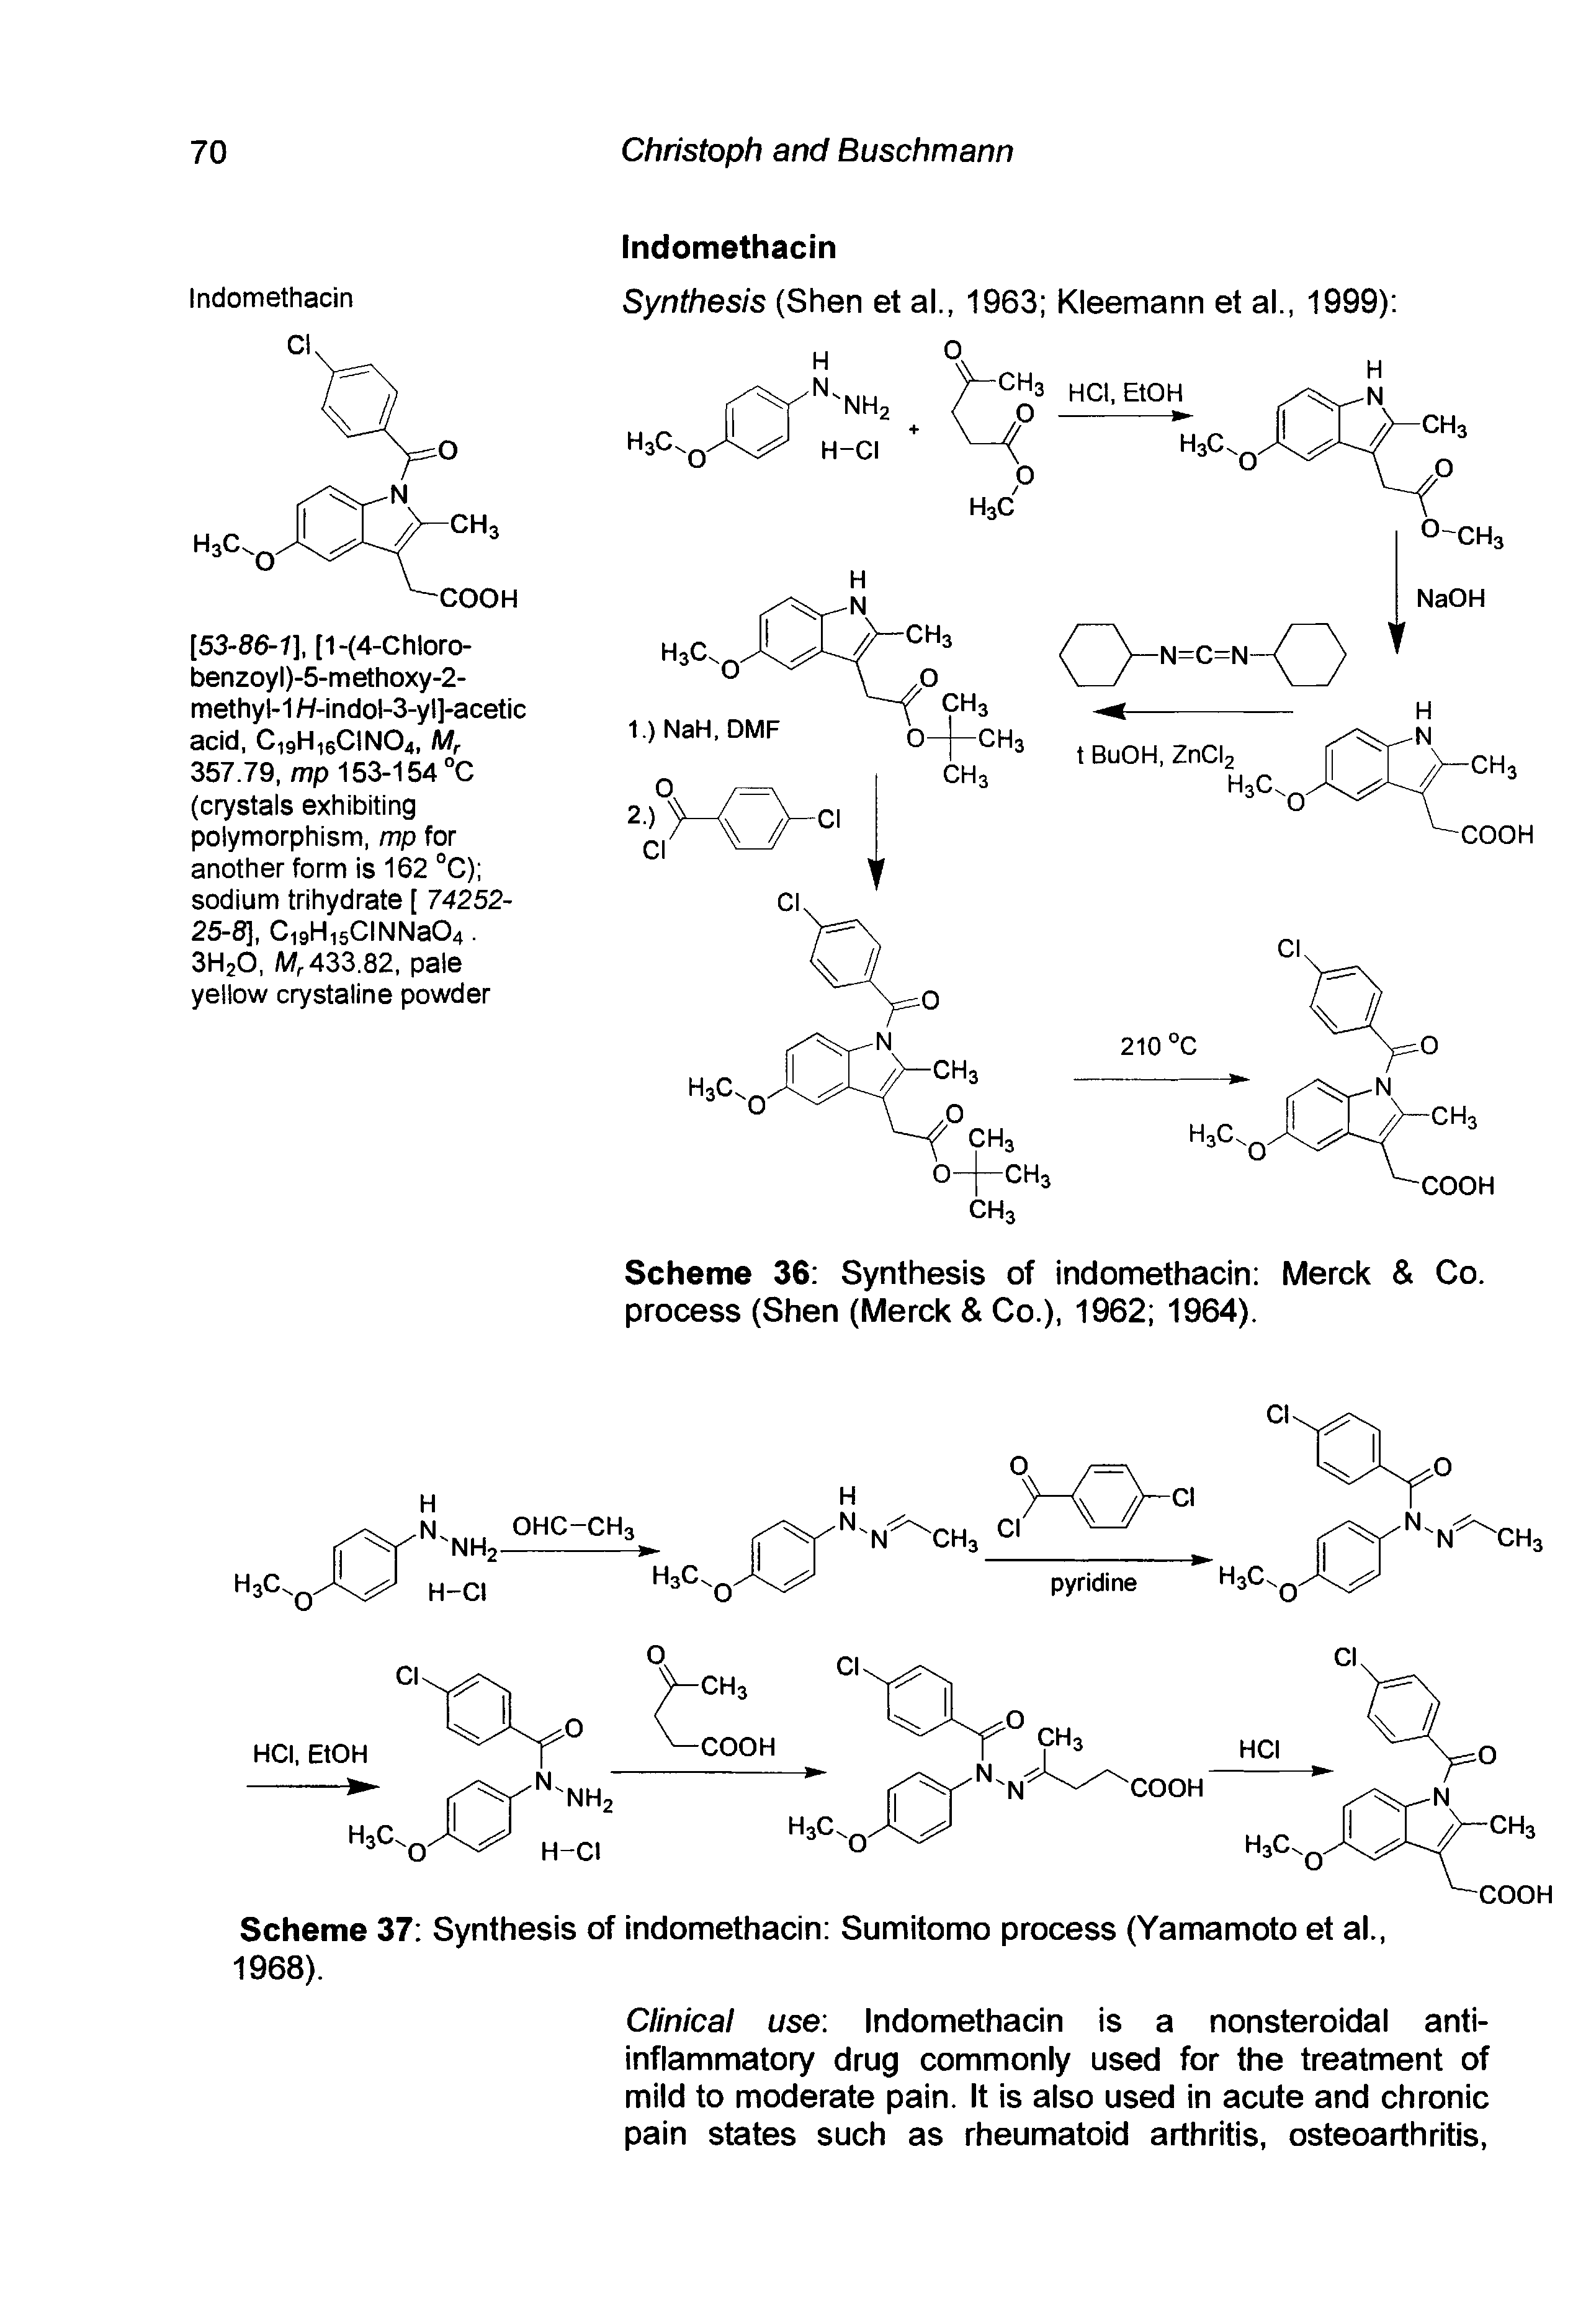 Scheme 37 Synthesis of indomethacin Sumitomo process (Yamamoto et al., 1968).